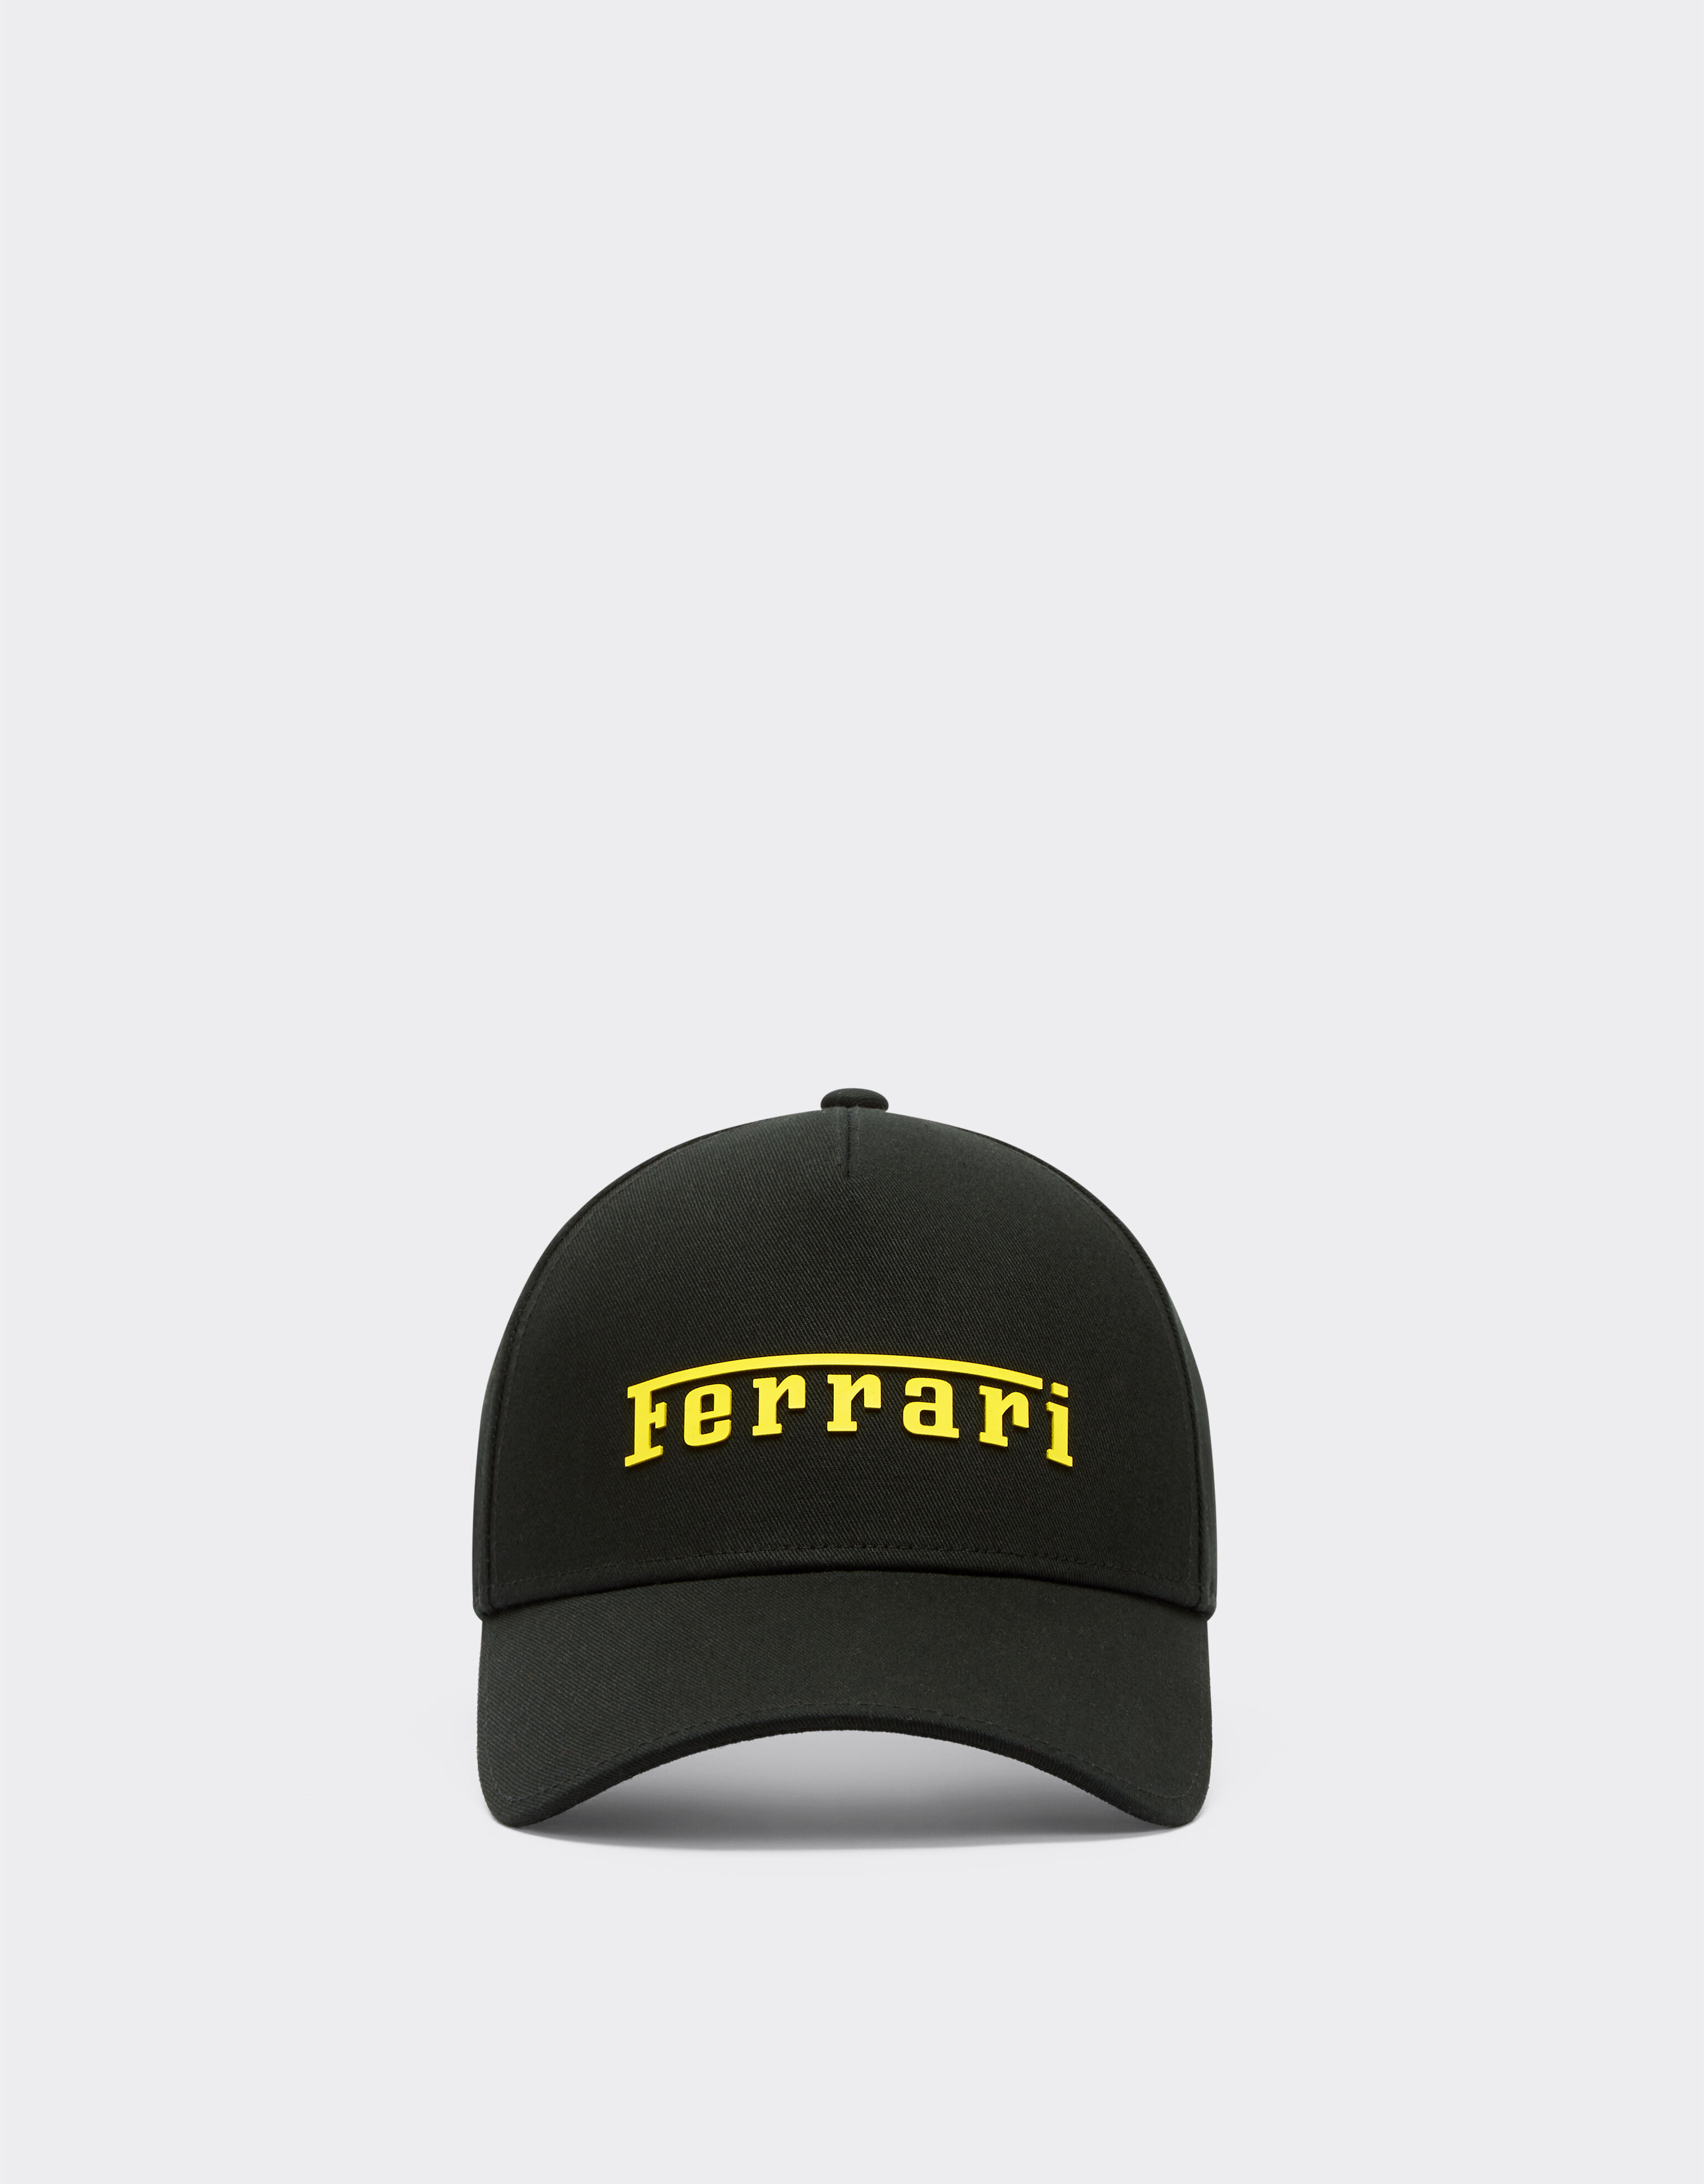 Ferrari Baseball hat with rubberised logo Optical White 20815f